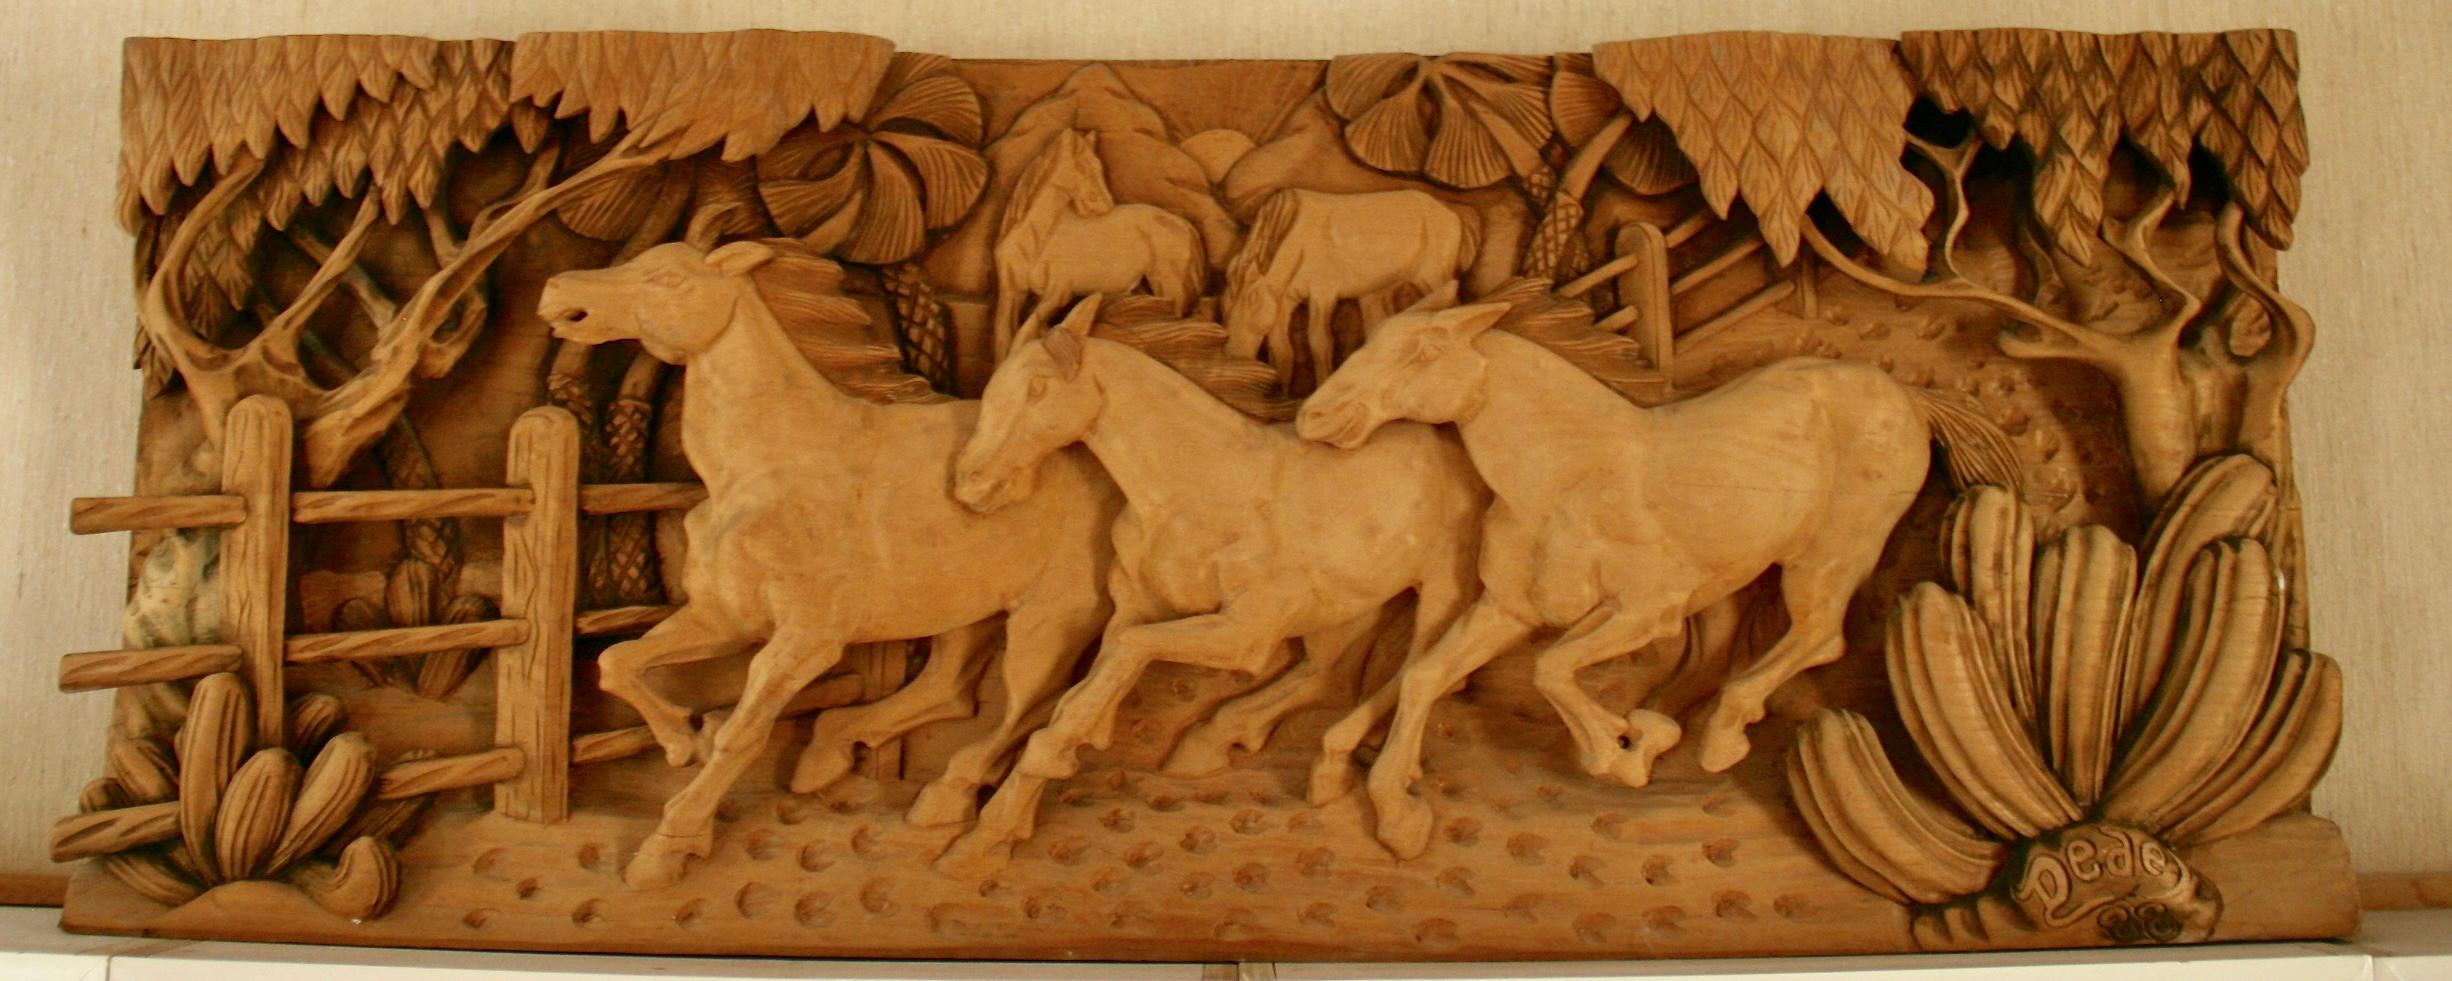 Unknown Figurative Sculpture -  Large Scale Western Wood Sculpture